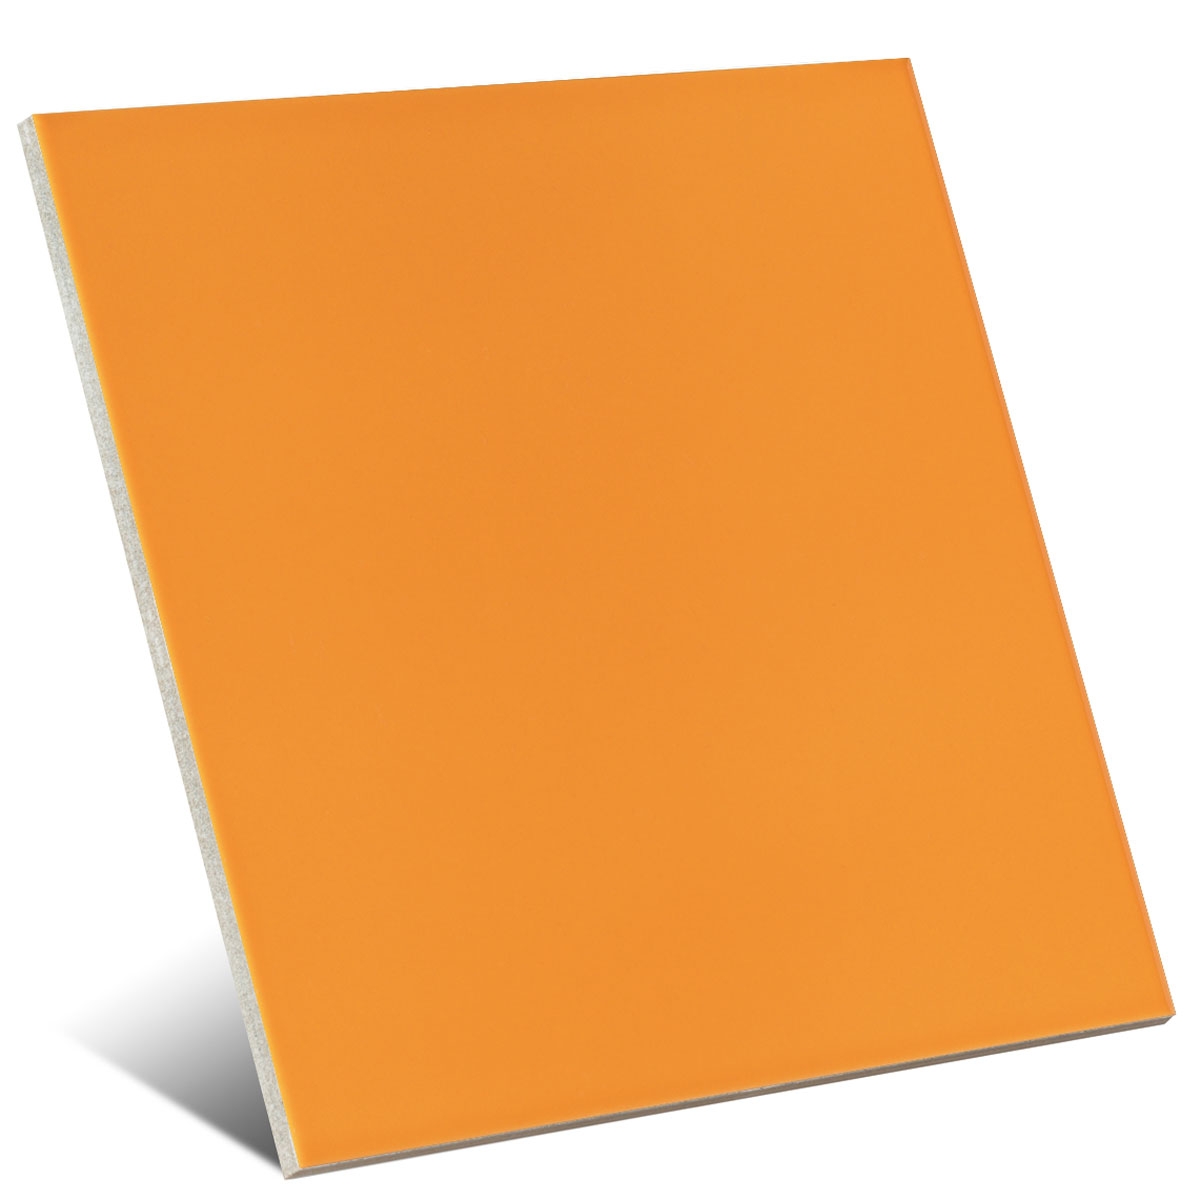 Cor Arancio Brilhante 20x20 cm (caixa 1 m2)